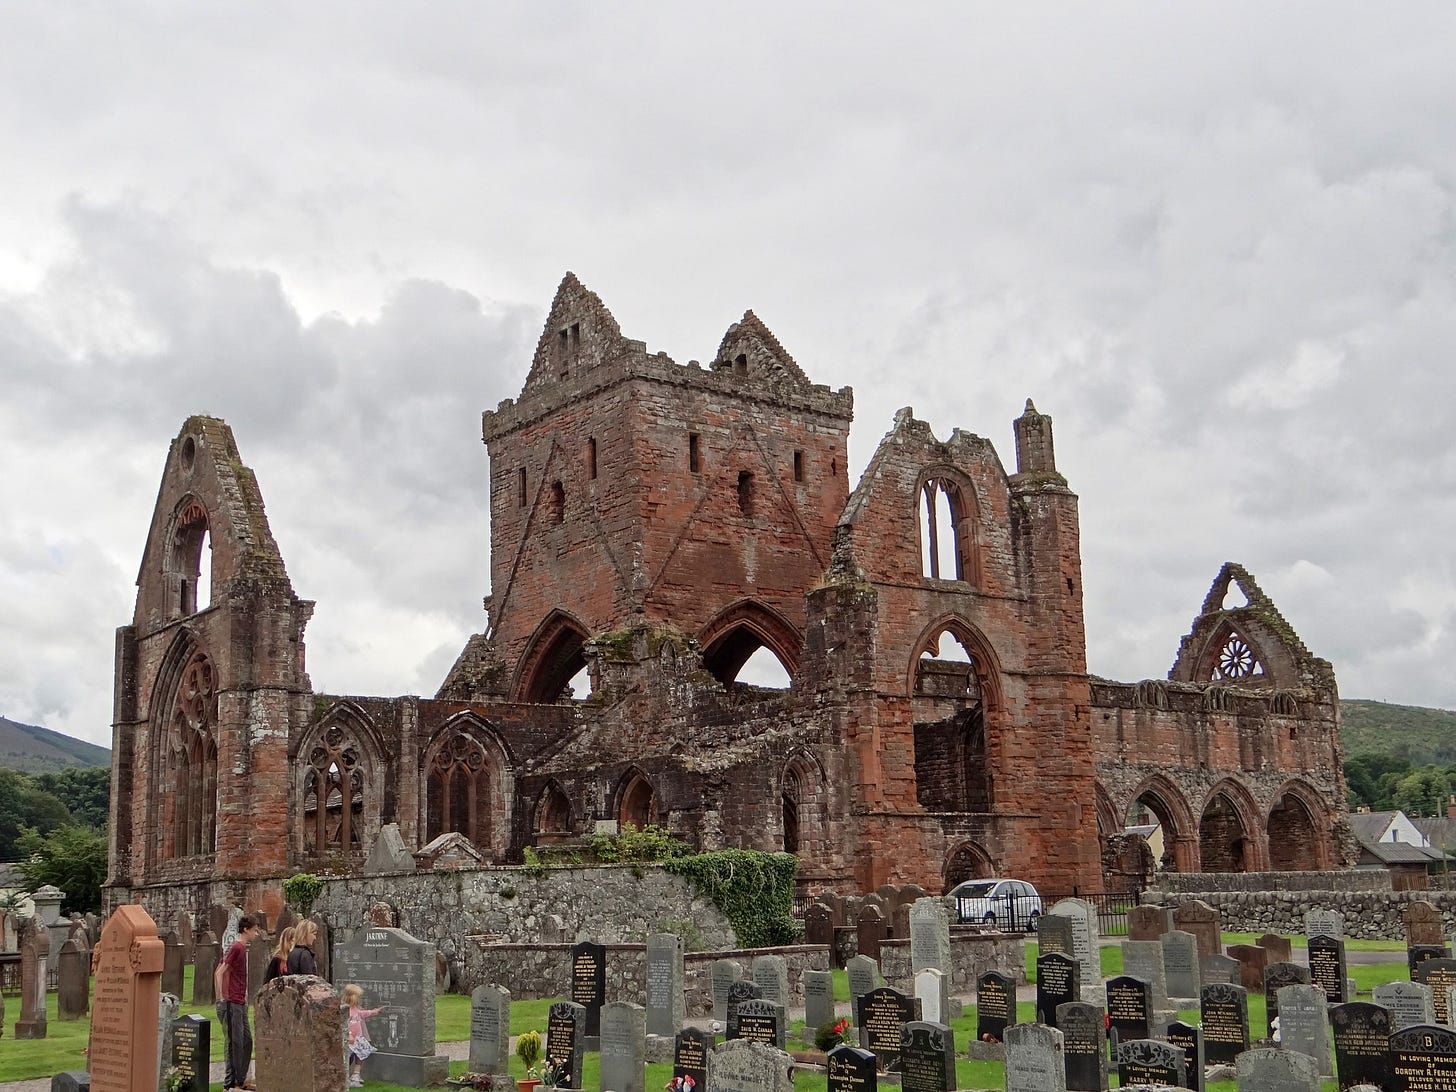 Cathedral ruins, gravestones